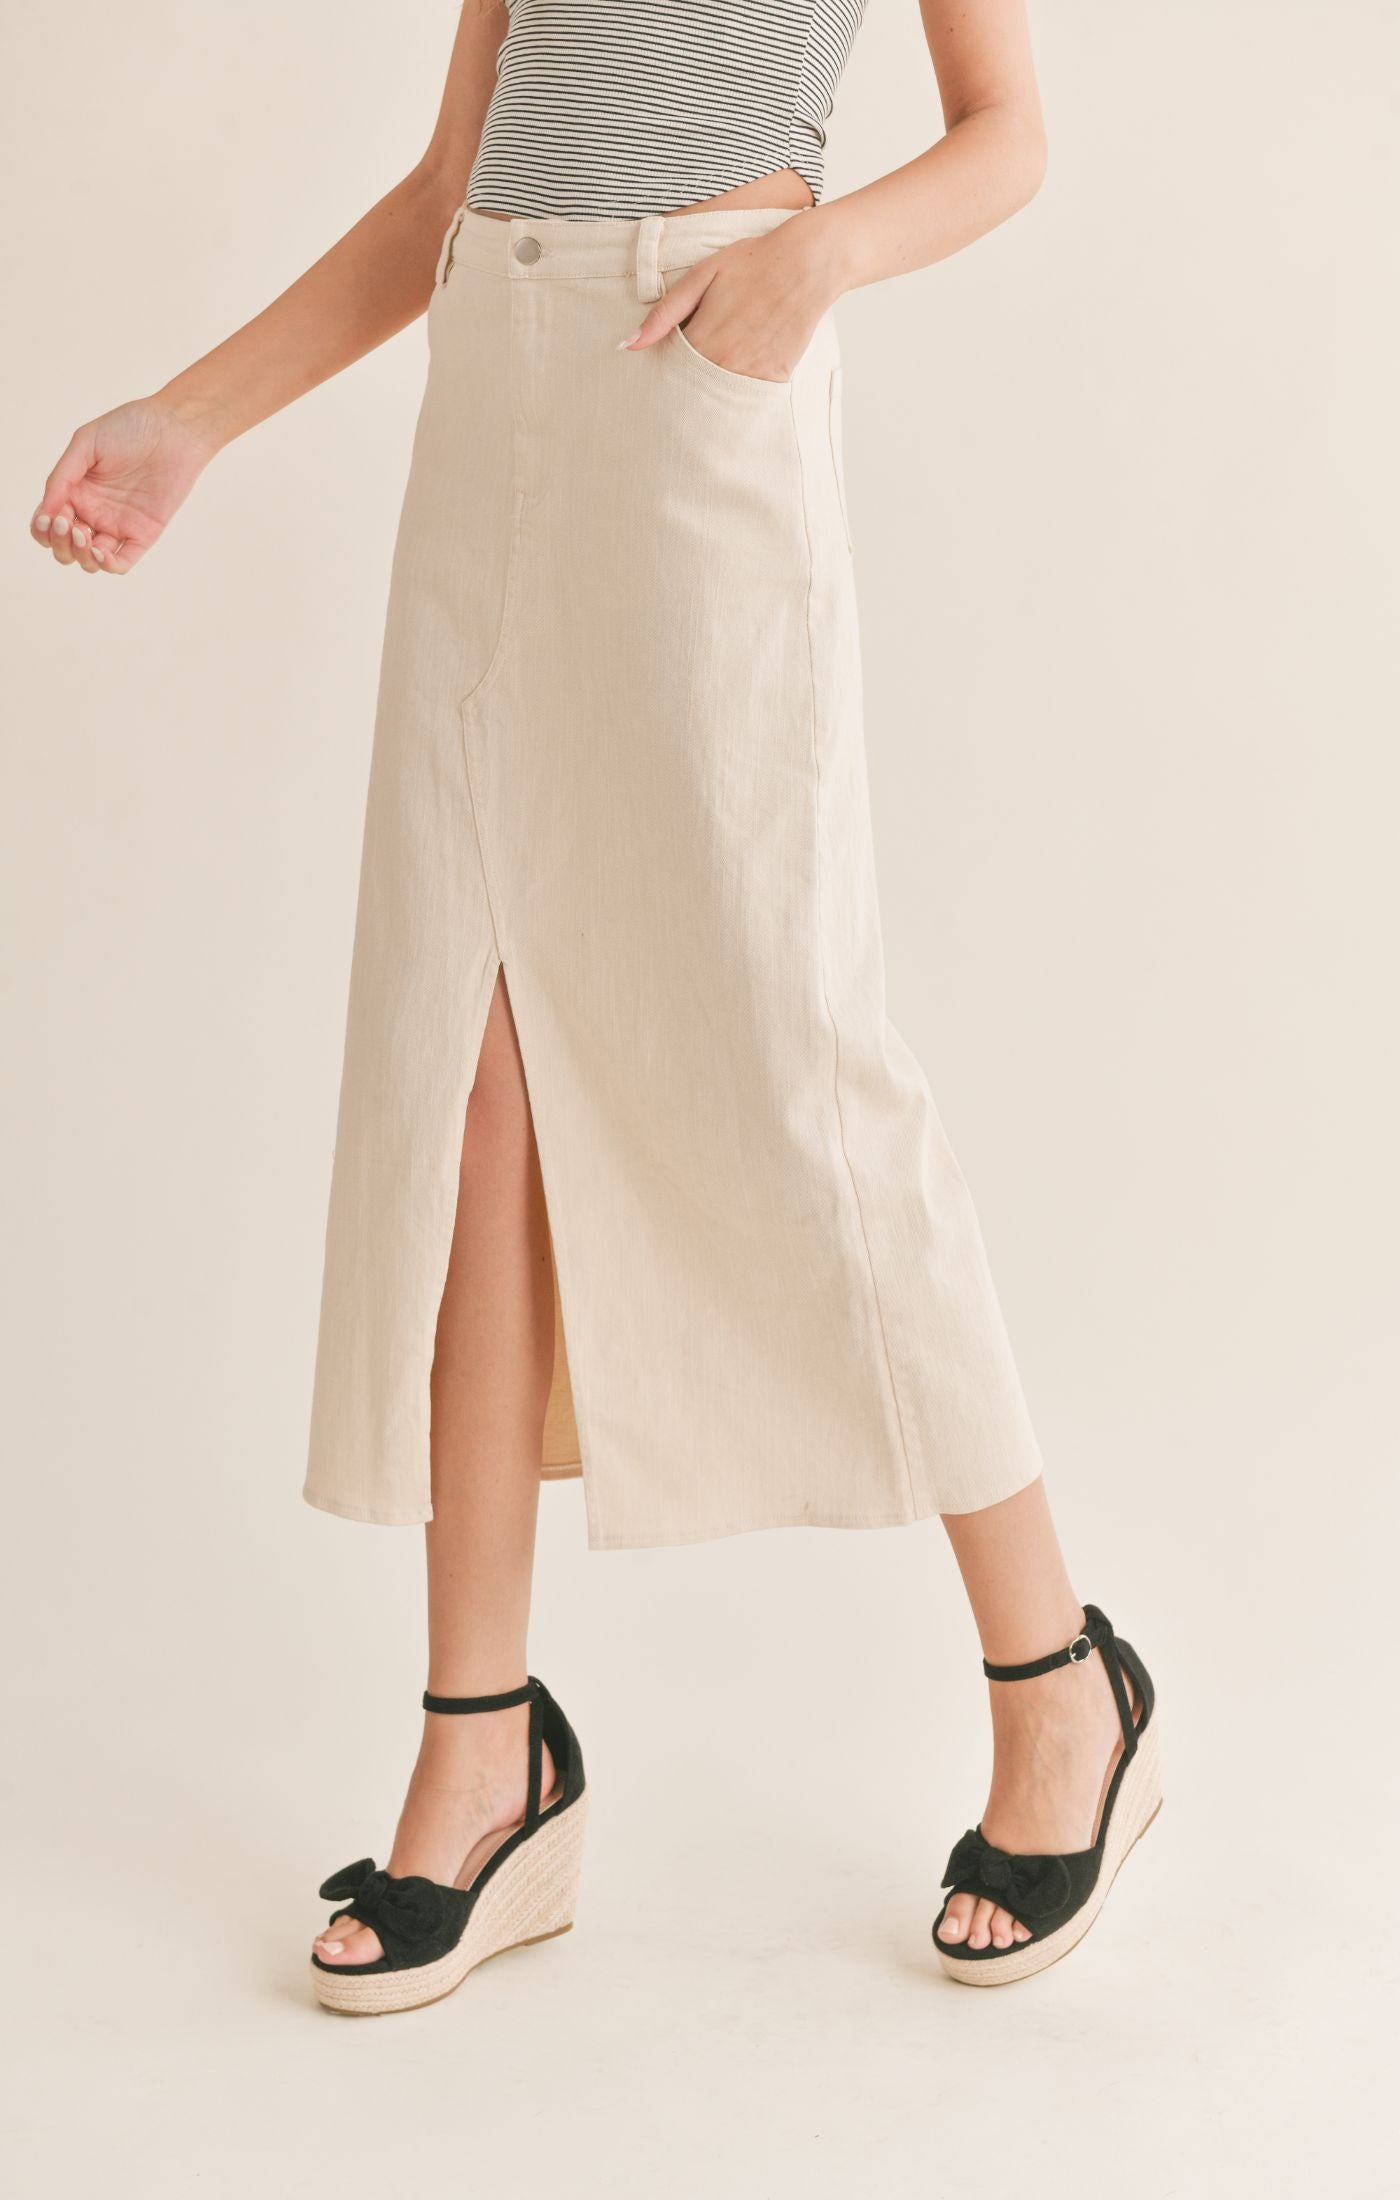 Clear Eyes Denim Skirt with Front Slit - Cream